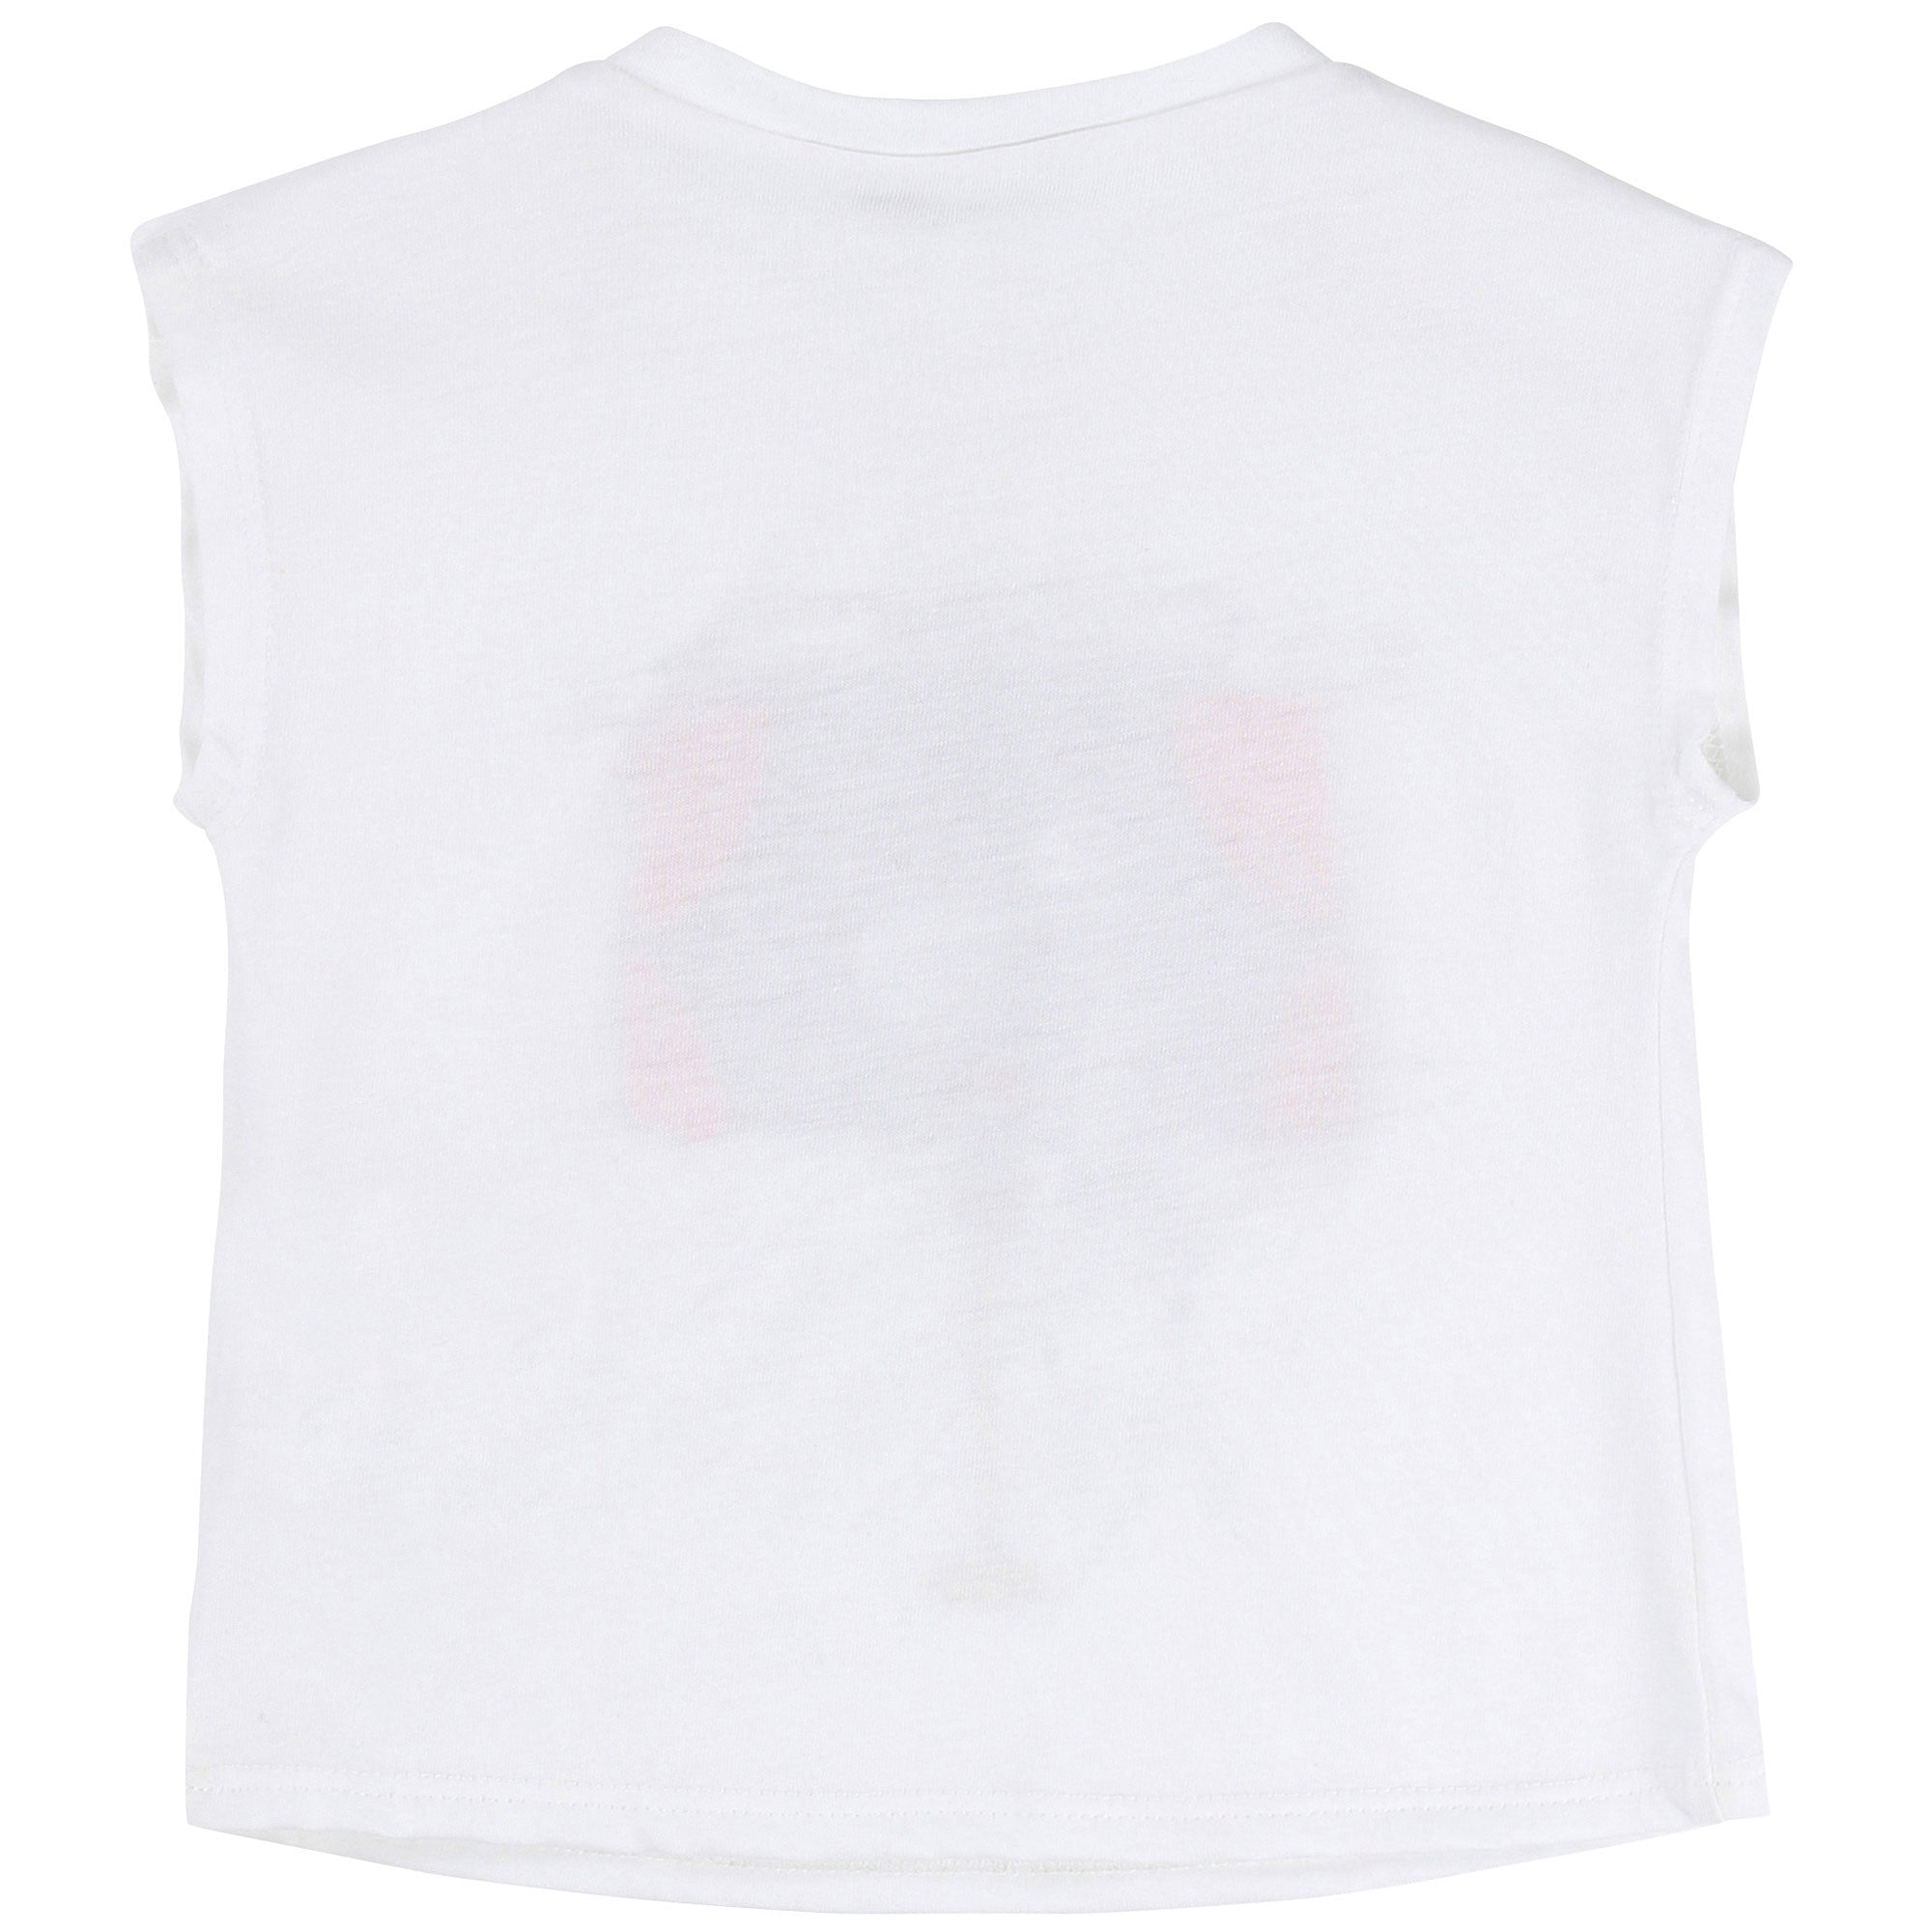 Baby Girls White Cotton T-shirt - CÉMAROSE | Children's Fashion Store - 2